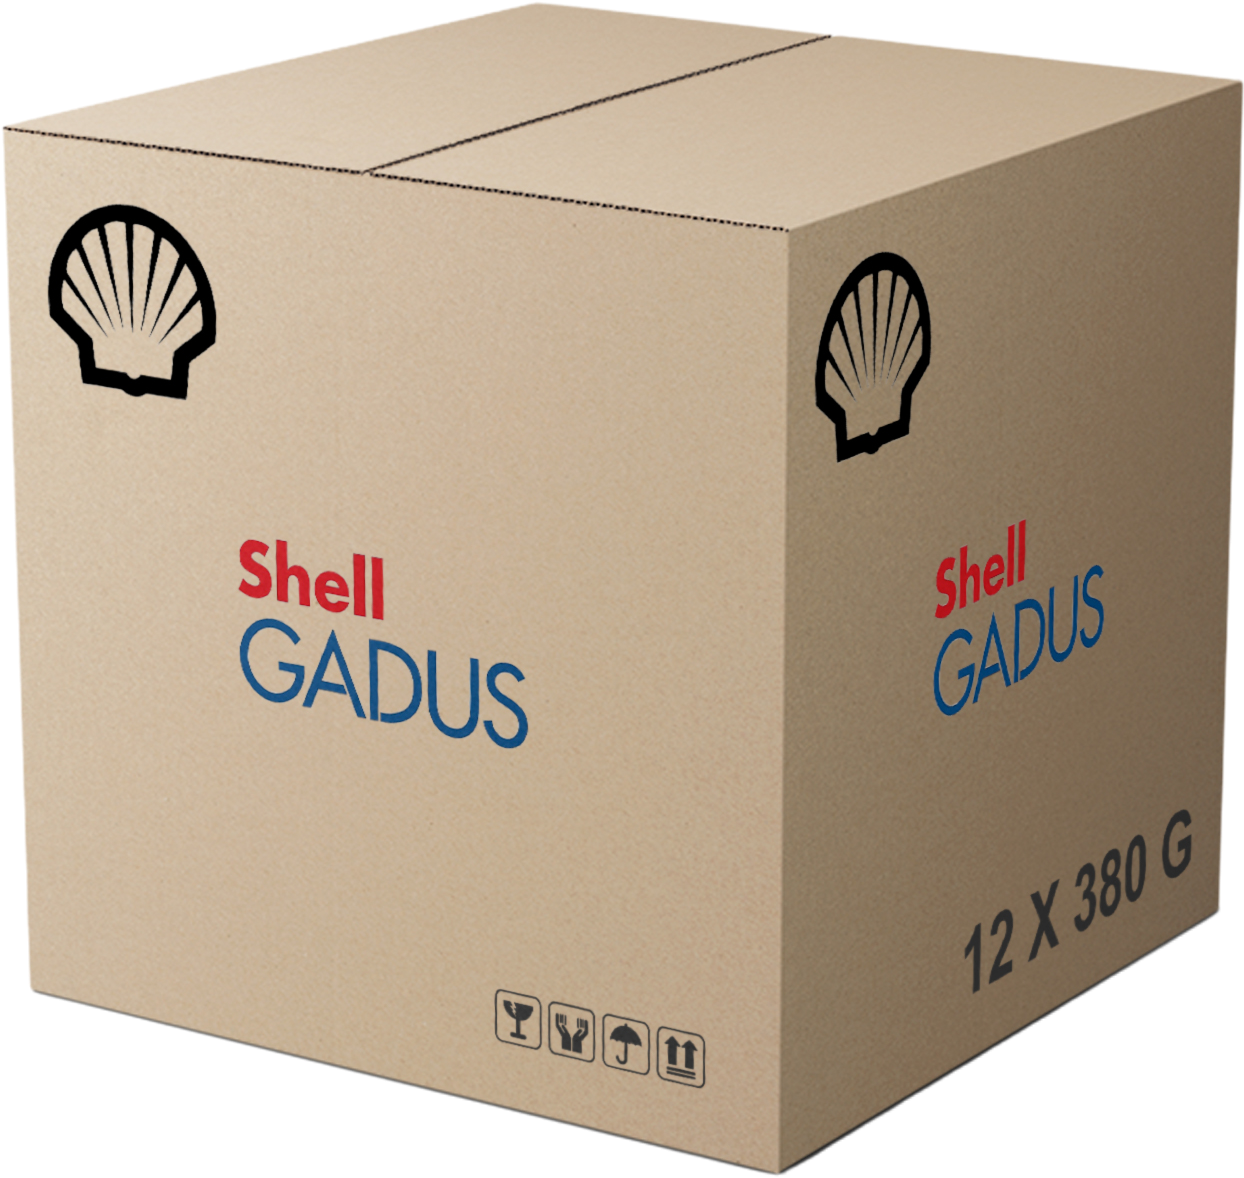 Shell Gadus S5 V42P 2.5, 12 x 380 gr